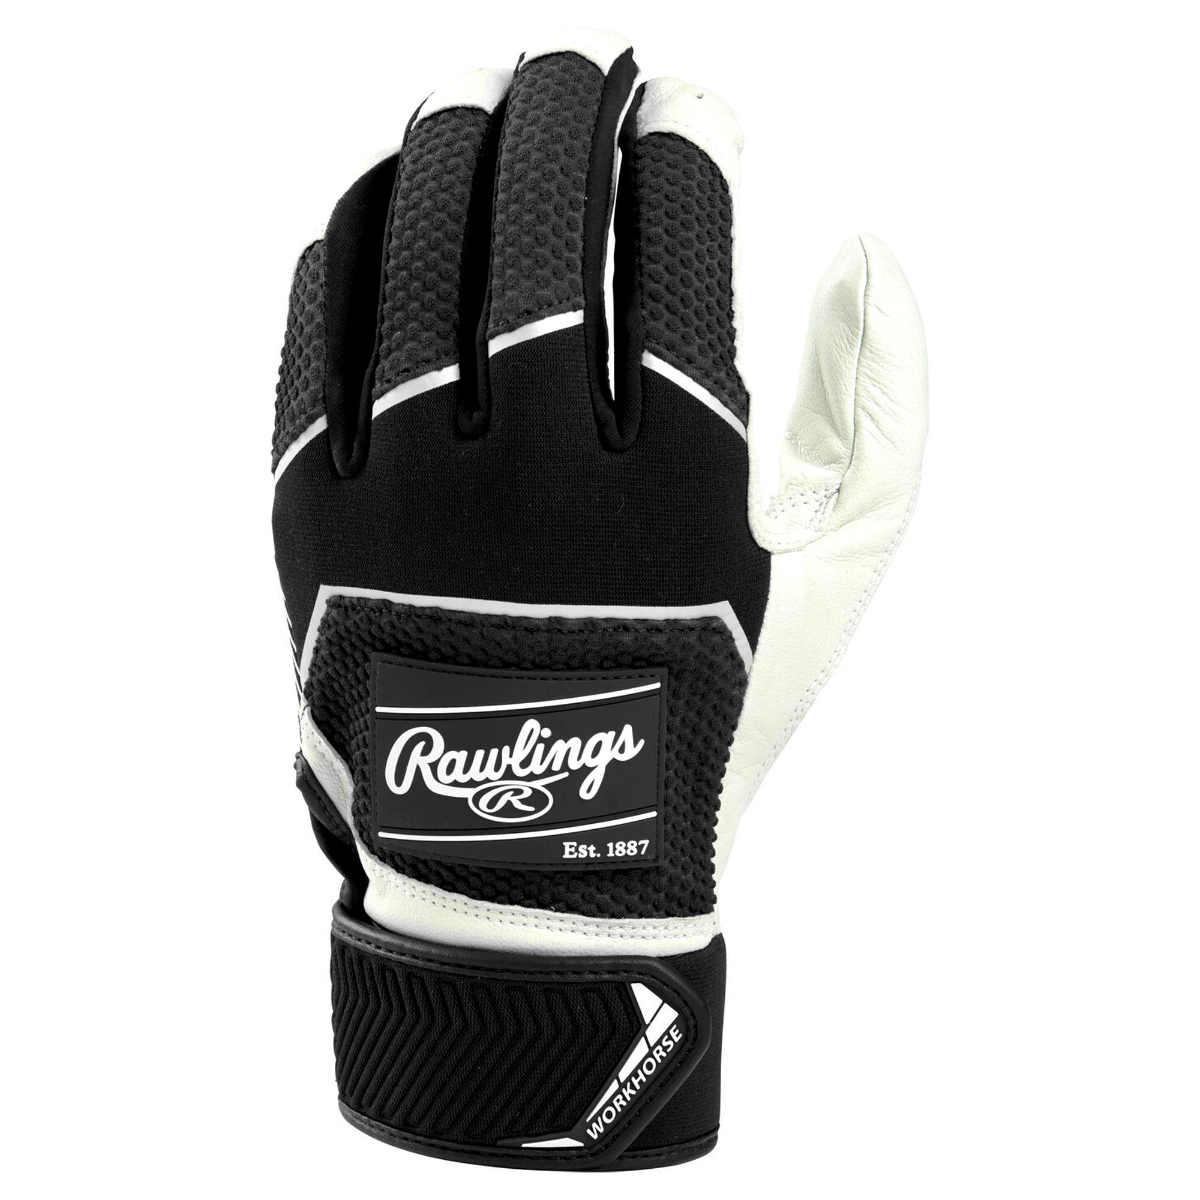 Rawlings Workhorse Youth Batting Gloves